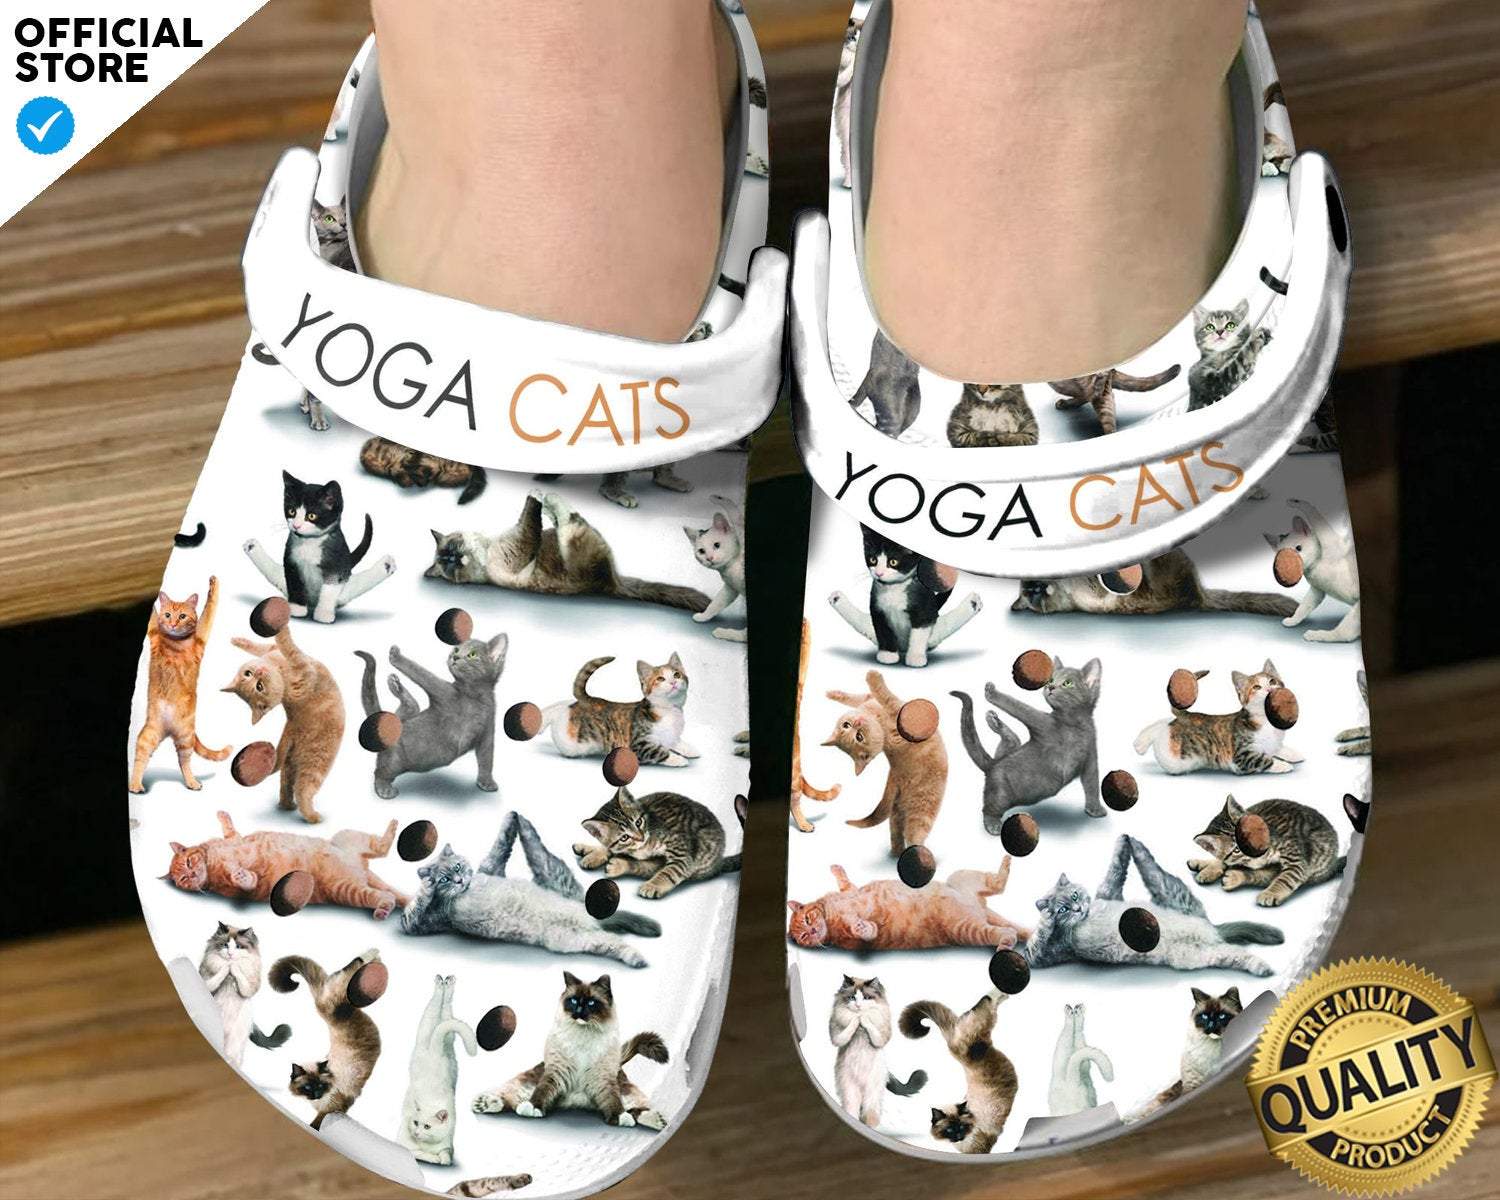 Yoga Cats Crocss Crocband Clog